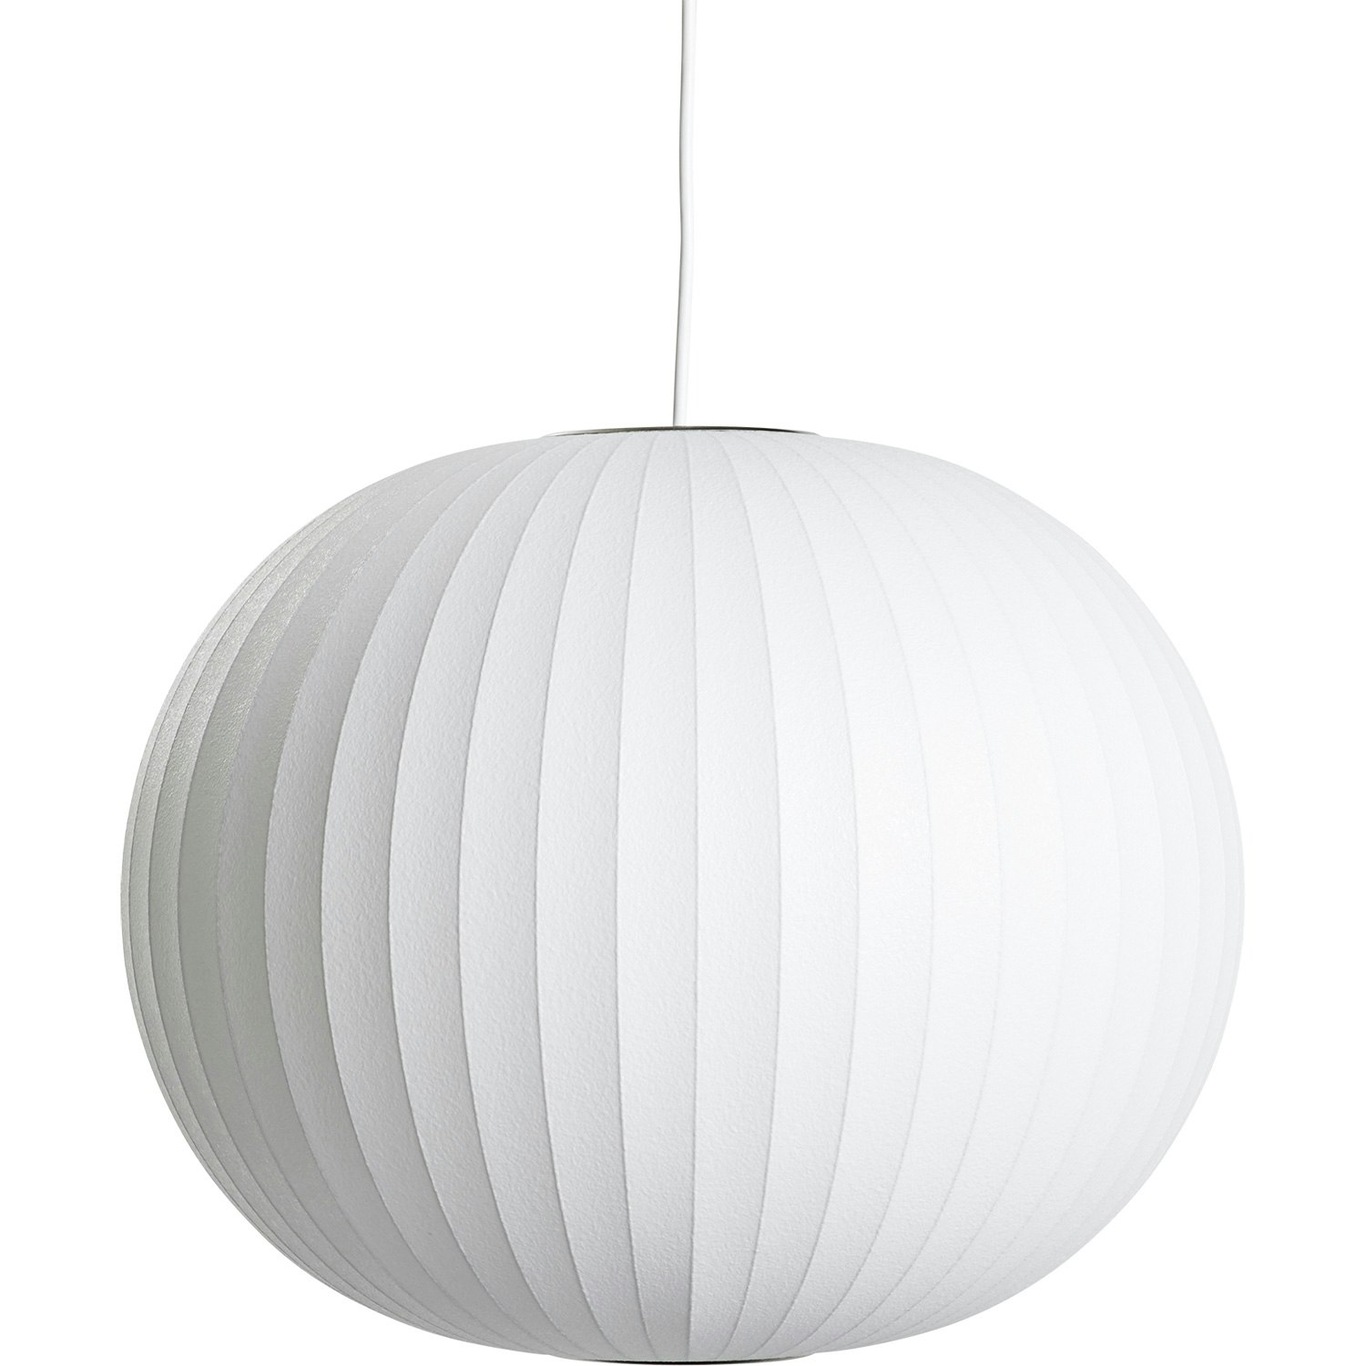 Nelson Ball Bubble Hanglamp, 48,5 cm